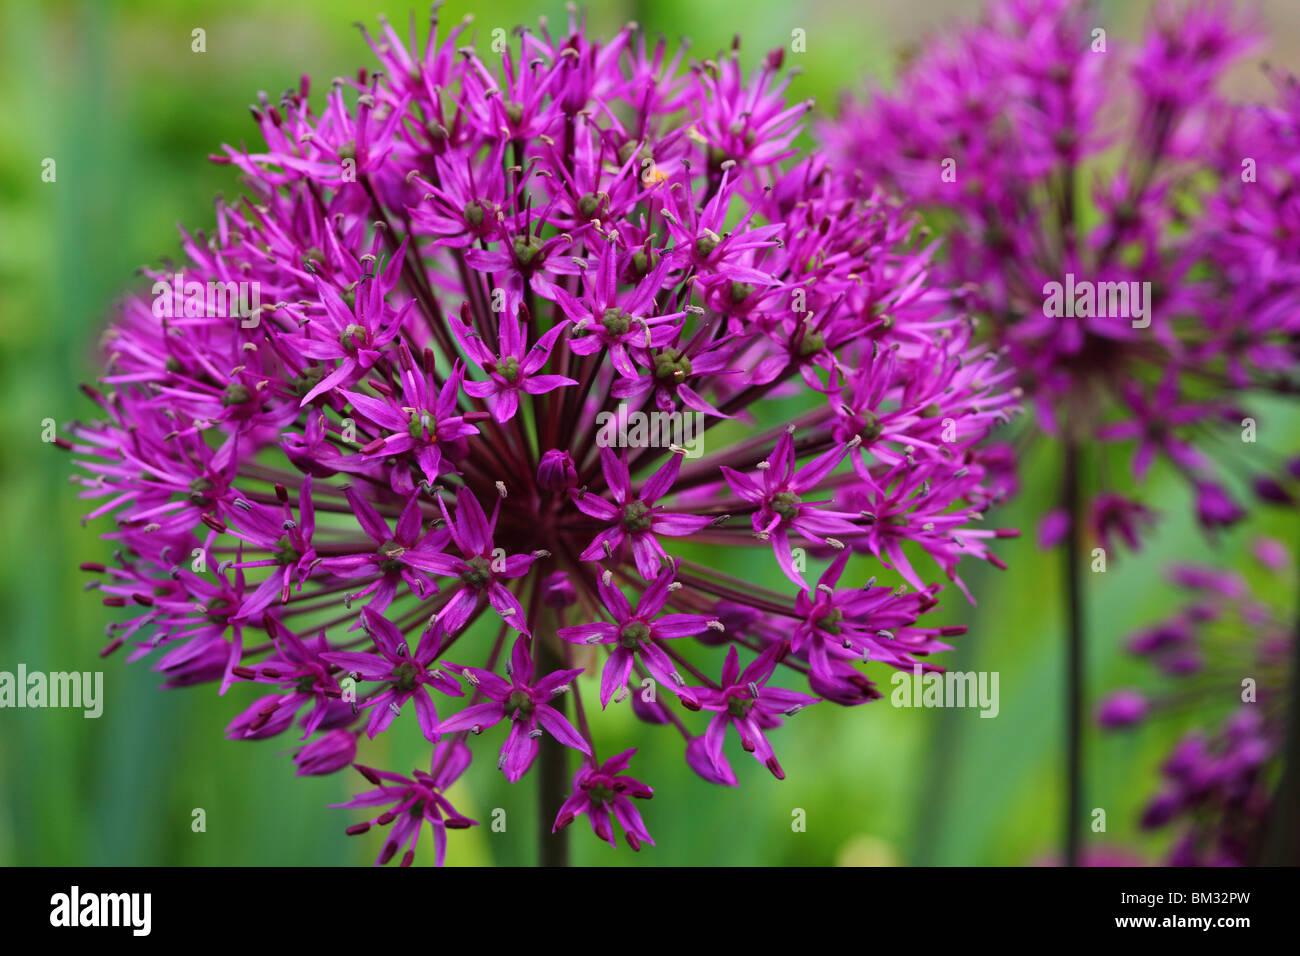 Allium cyaneum purple flowers close up Stock Photo